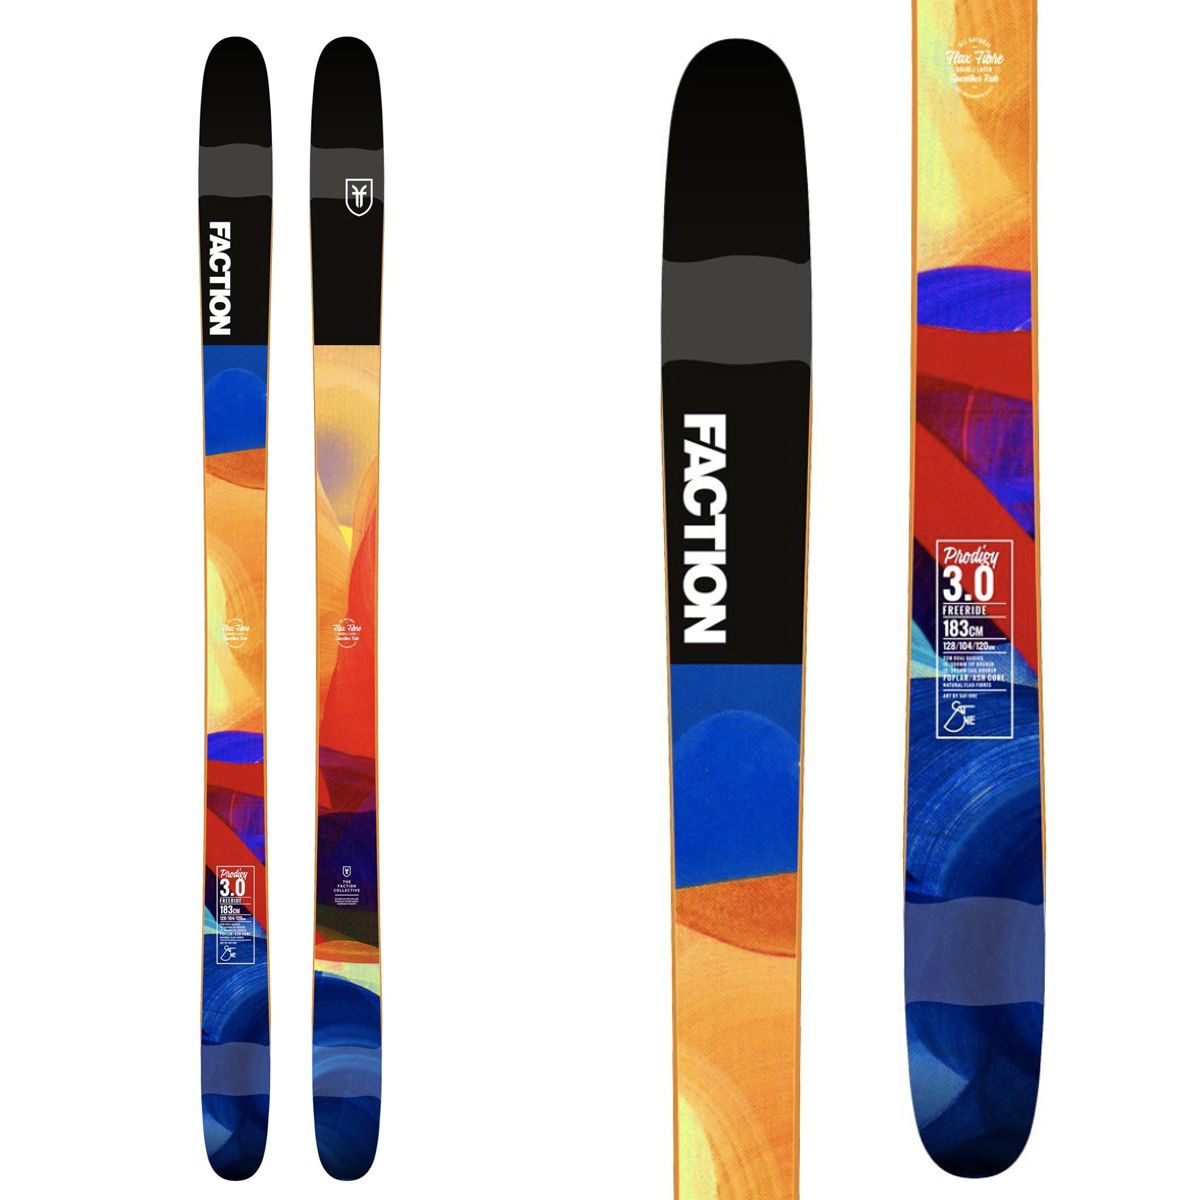 Ski Prodigy 3.0 2019